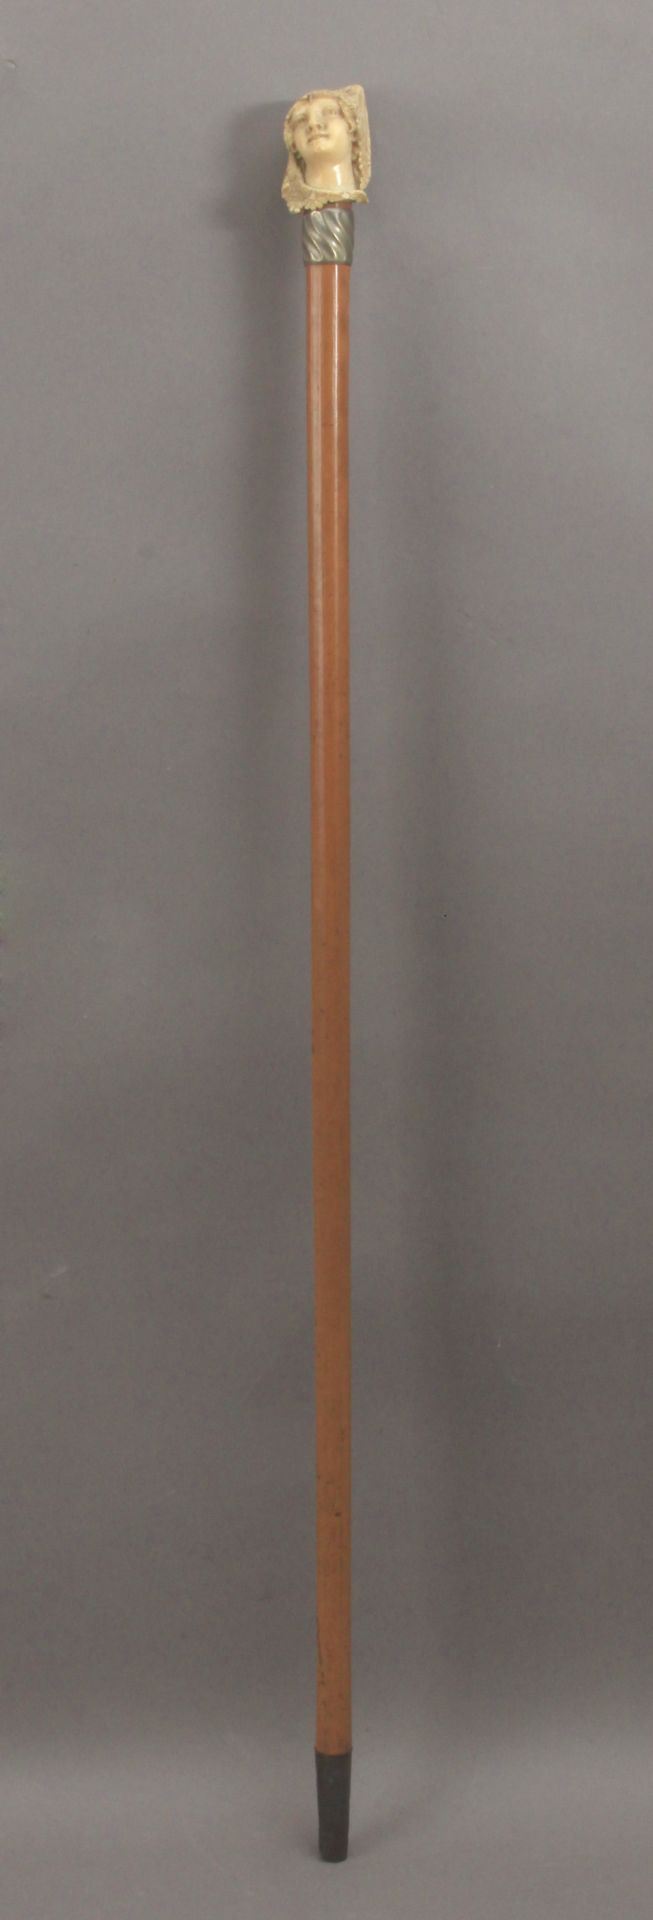 A 20th century Spanish walking cane - Image 6 of 8